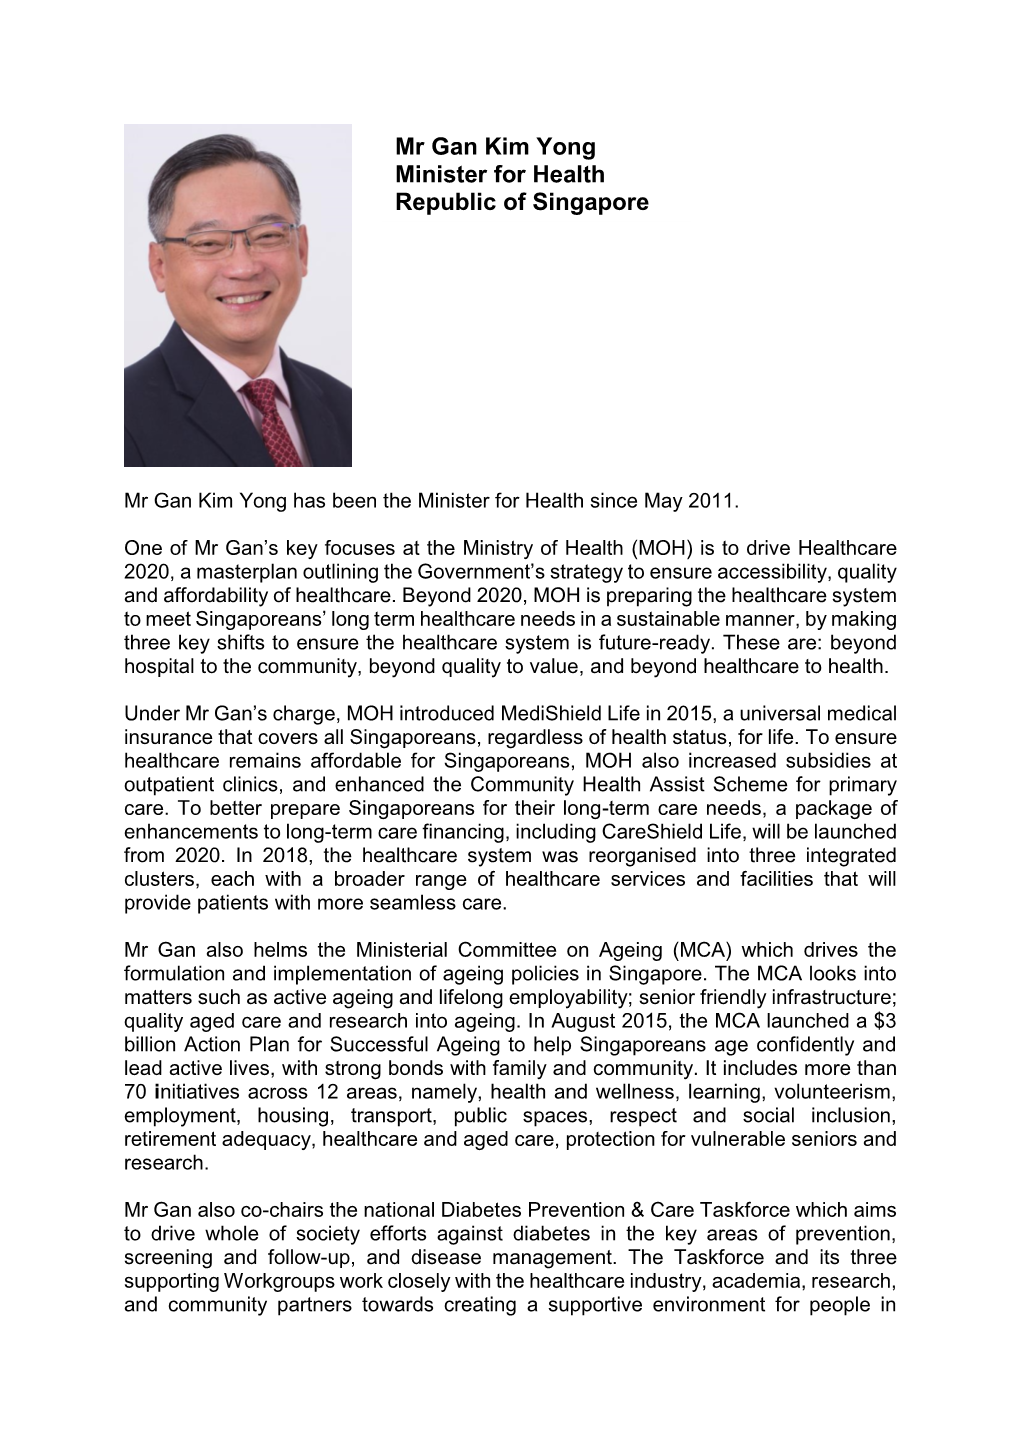 Mr Gan Kim Yong Minister for Health Republic of Singapore